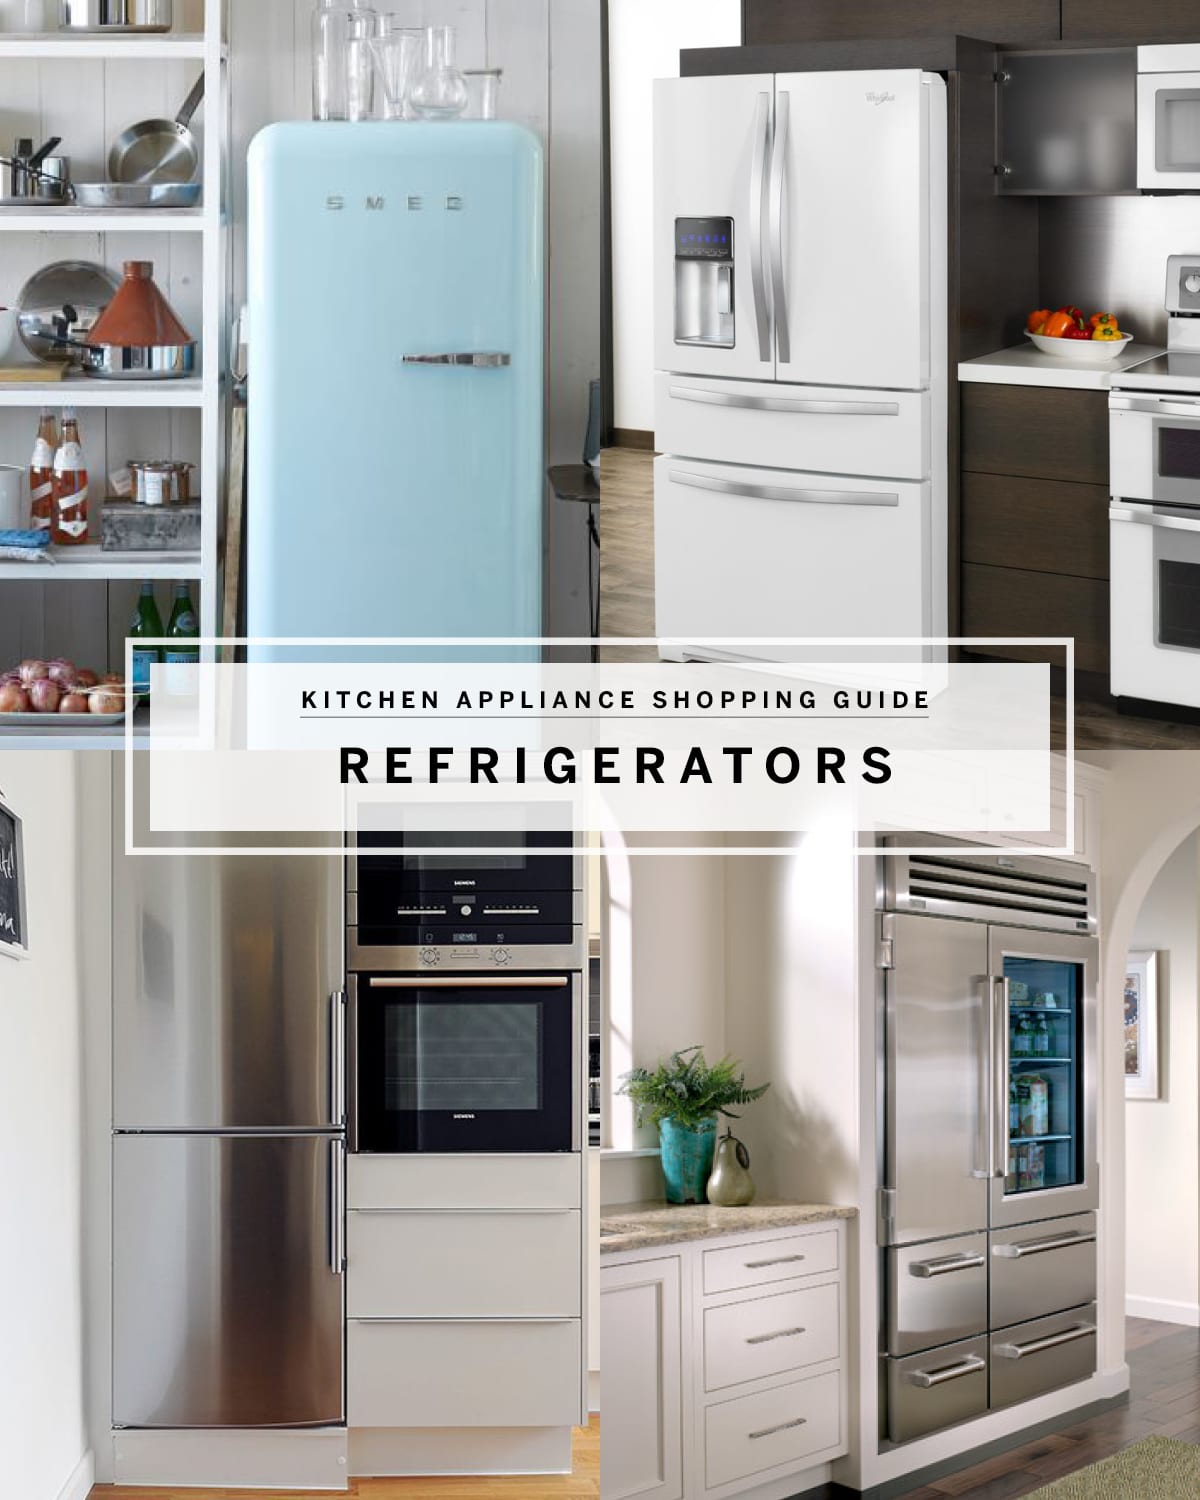 Full size refrigerator - appliances - by owner - sale - craigslist